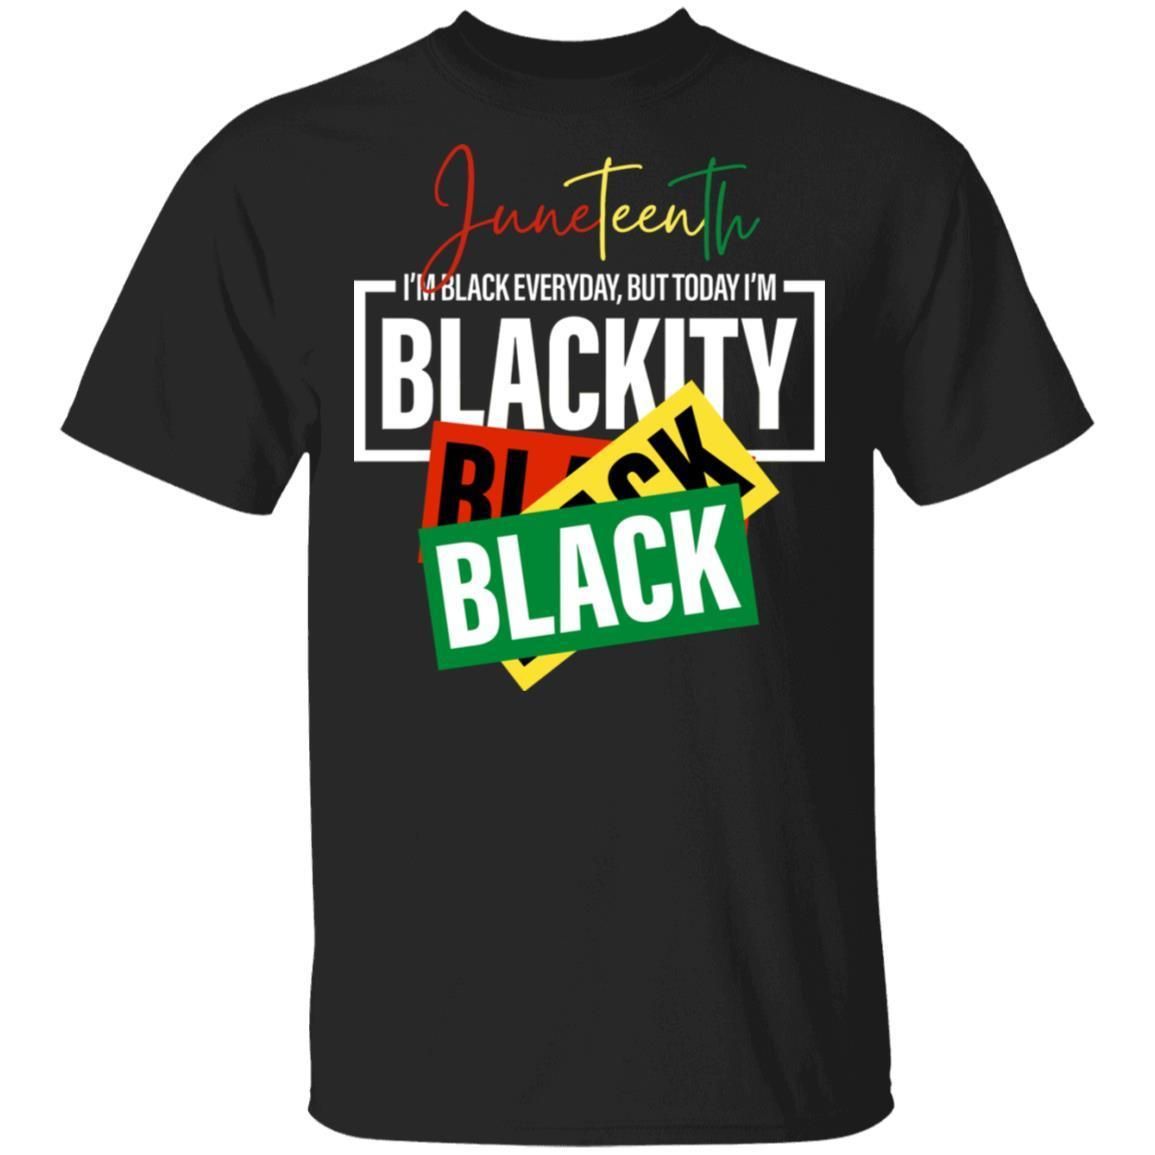 Blackity Black Black T-Shirt